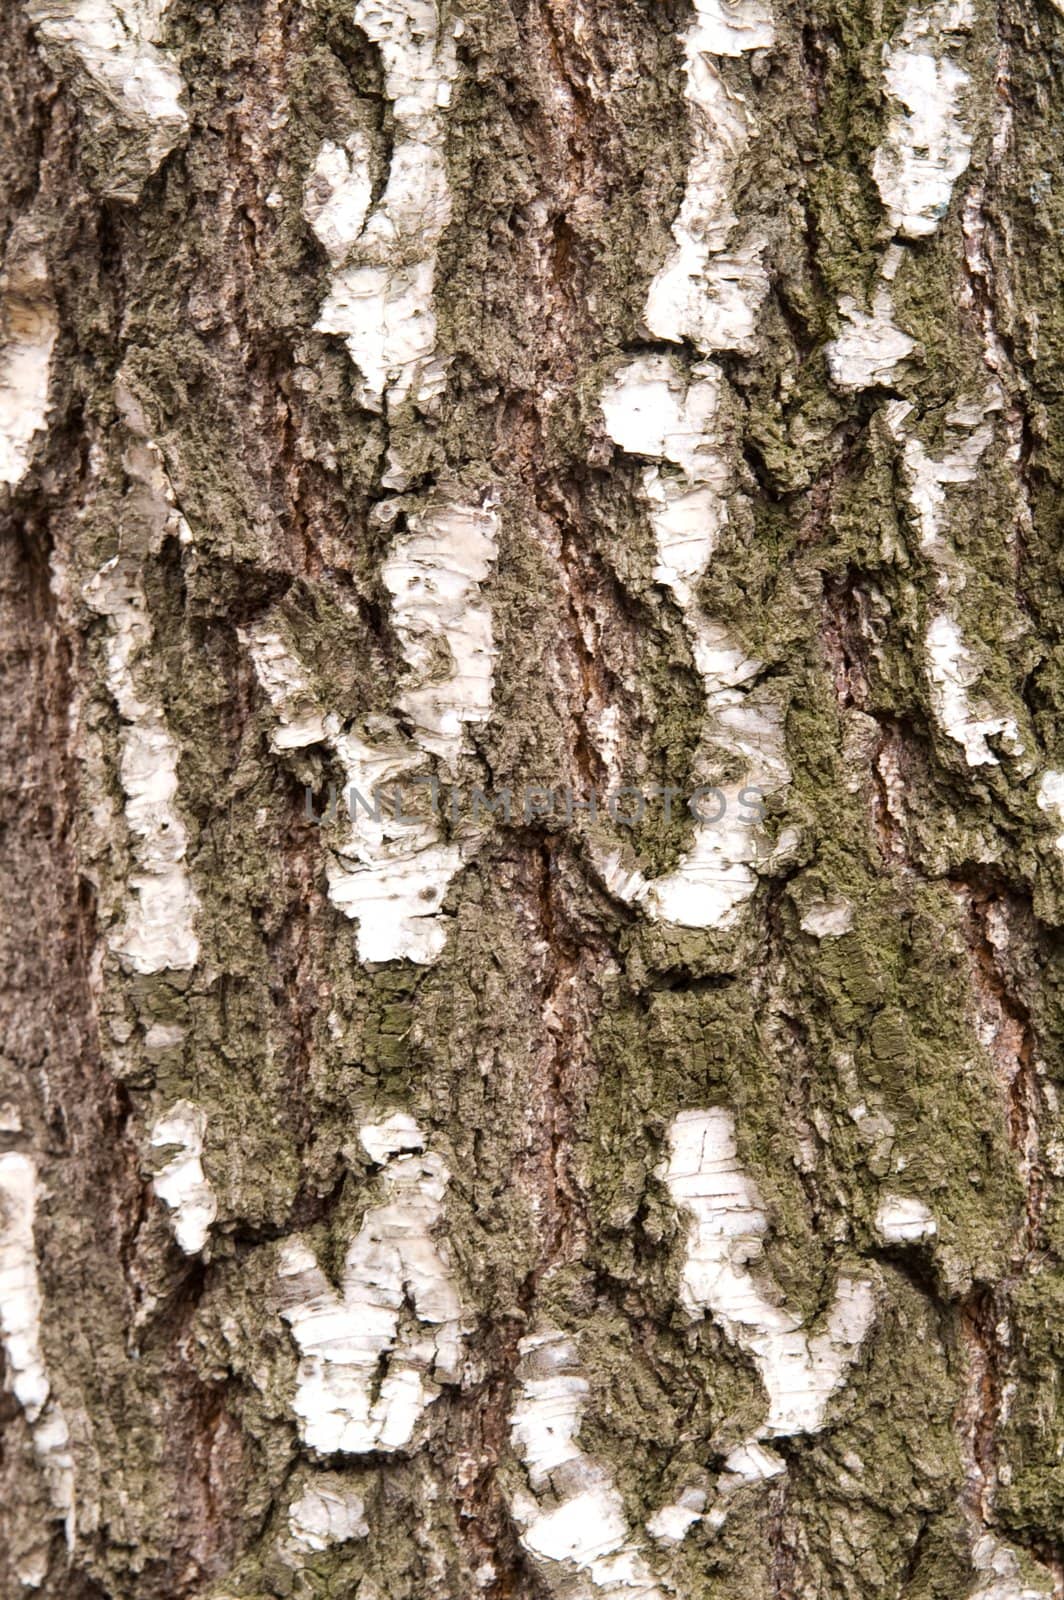 Black and white birch bark